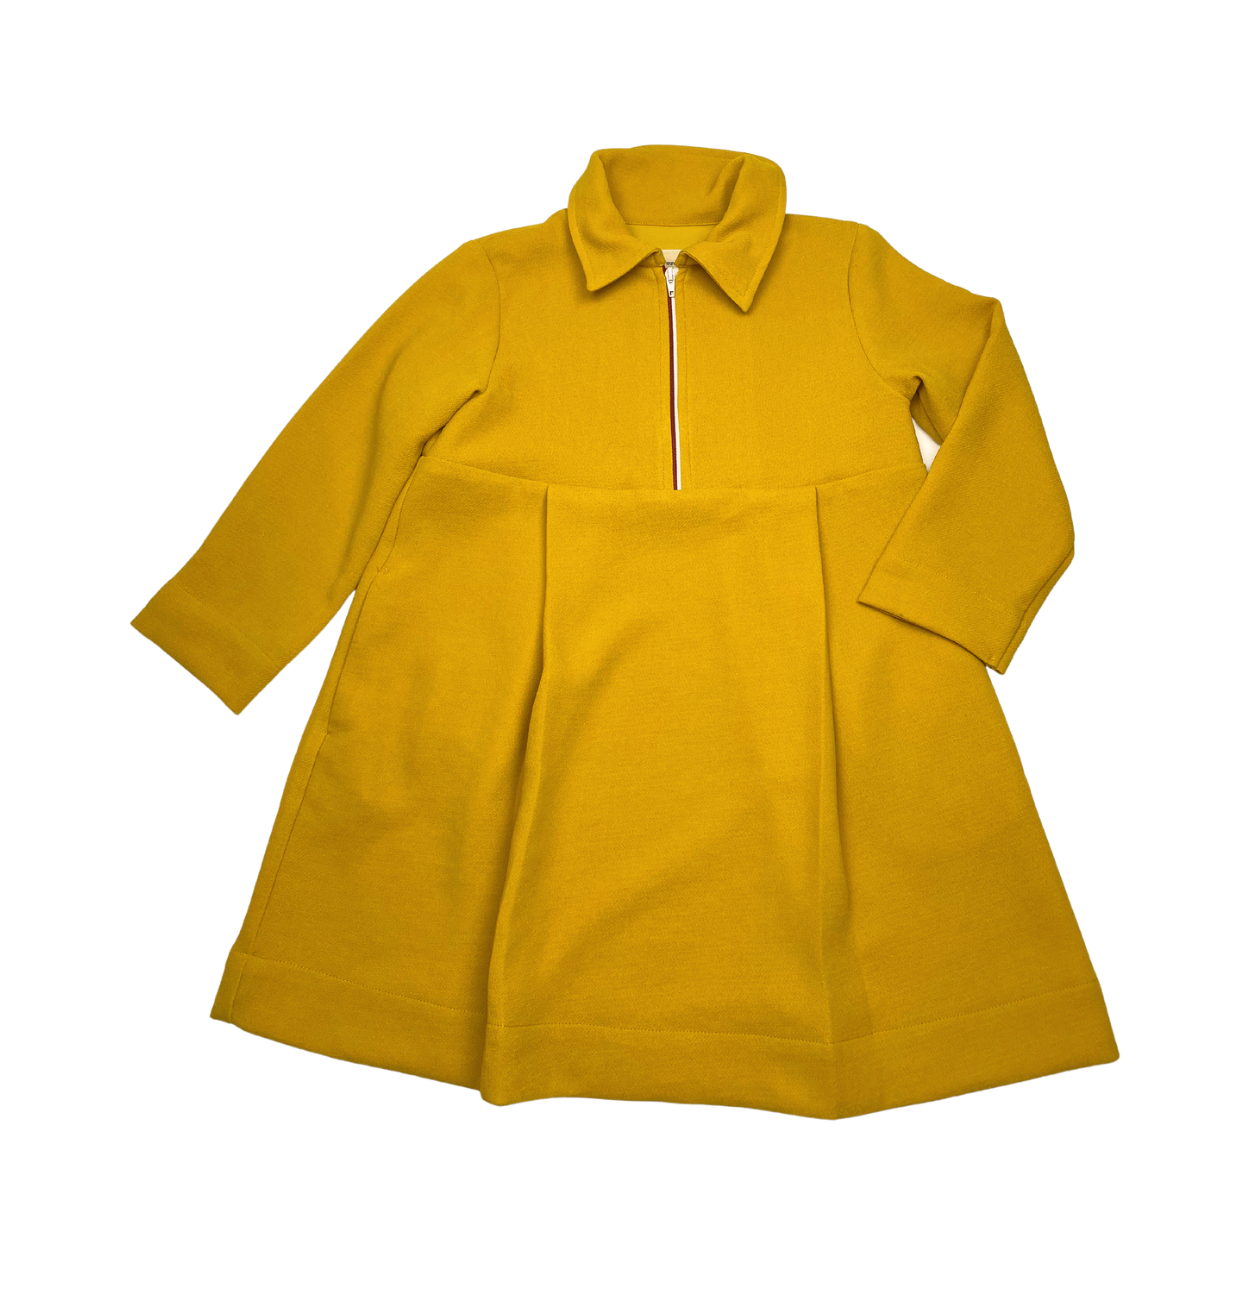 BELLEROSE - Robe jaune à poches - 8 ans